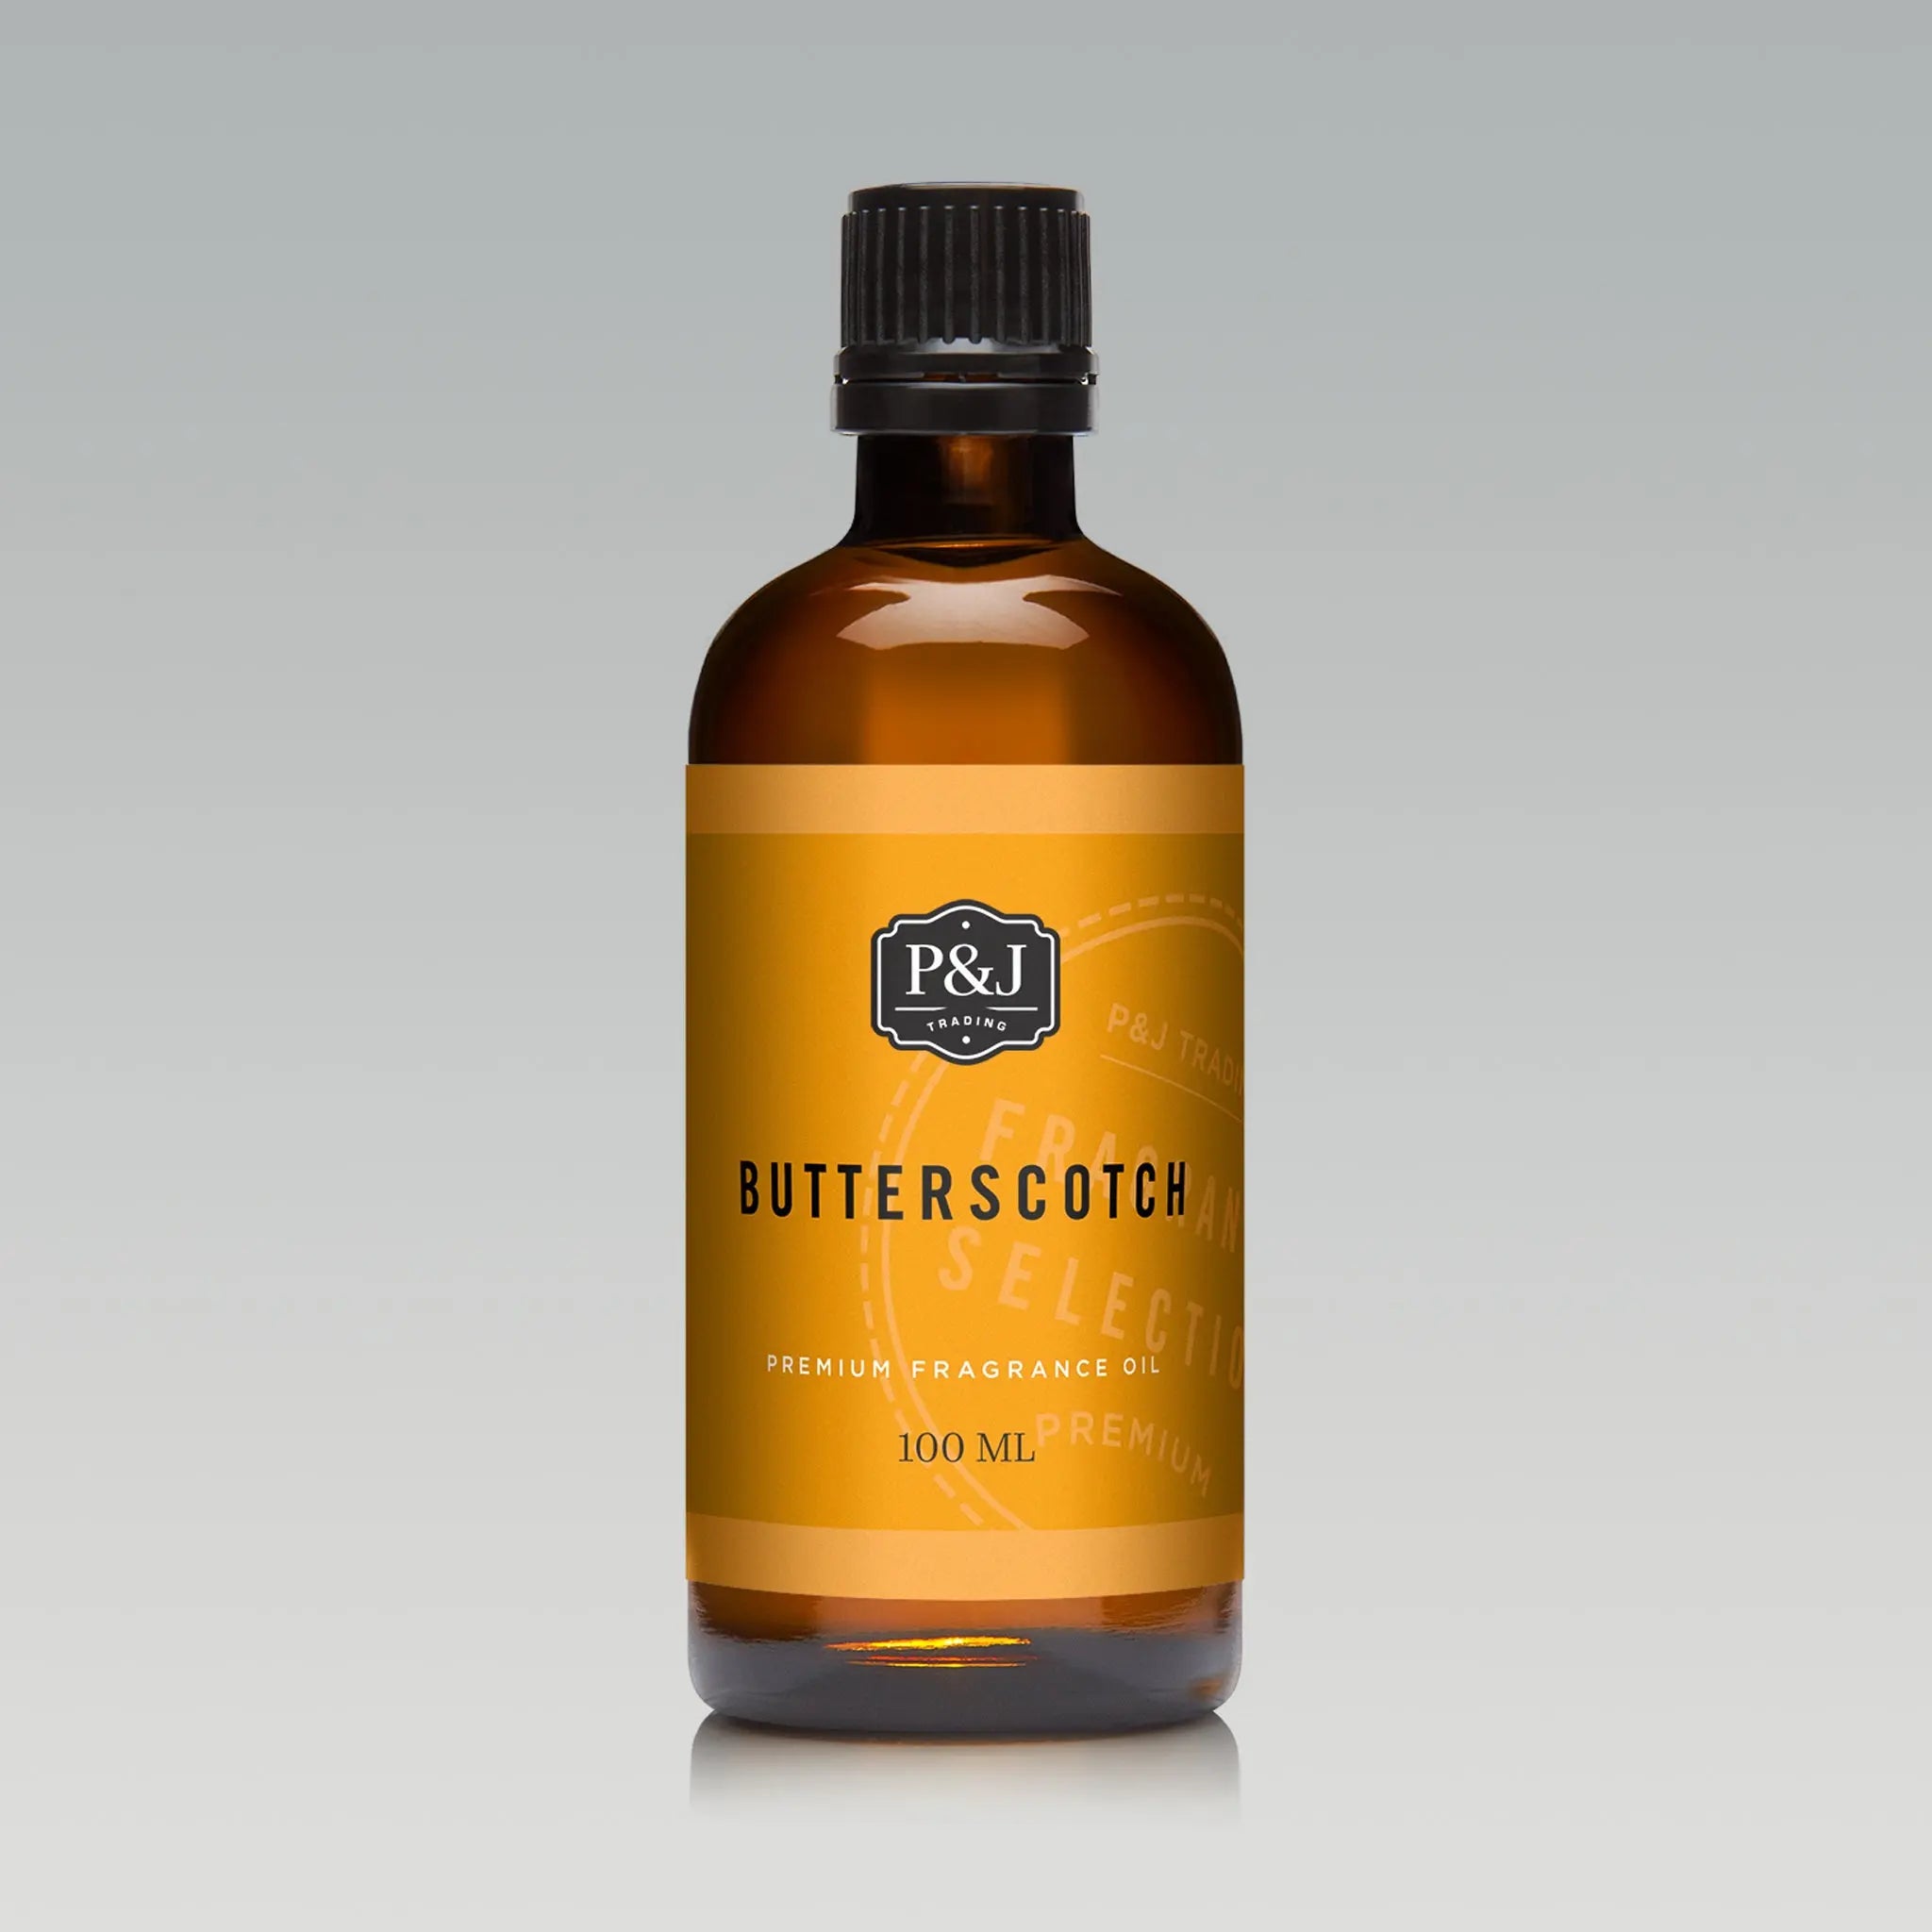 Butterscotch Fragrance Oil